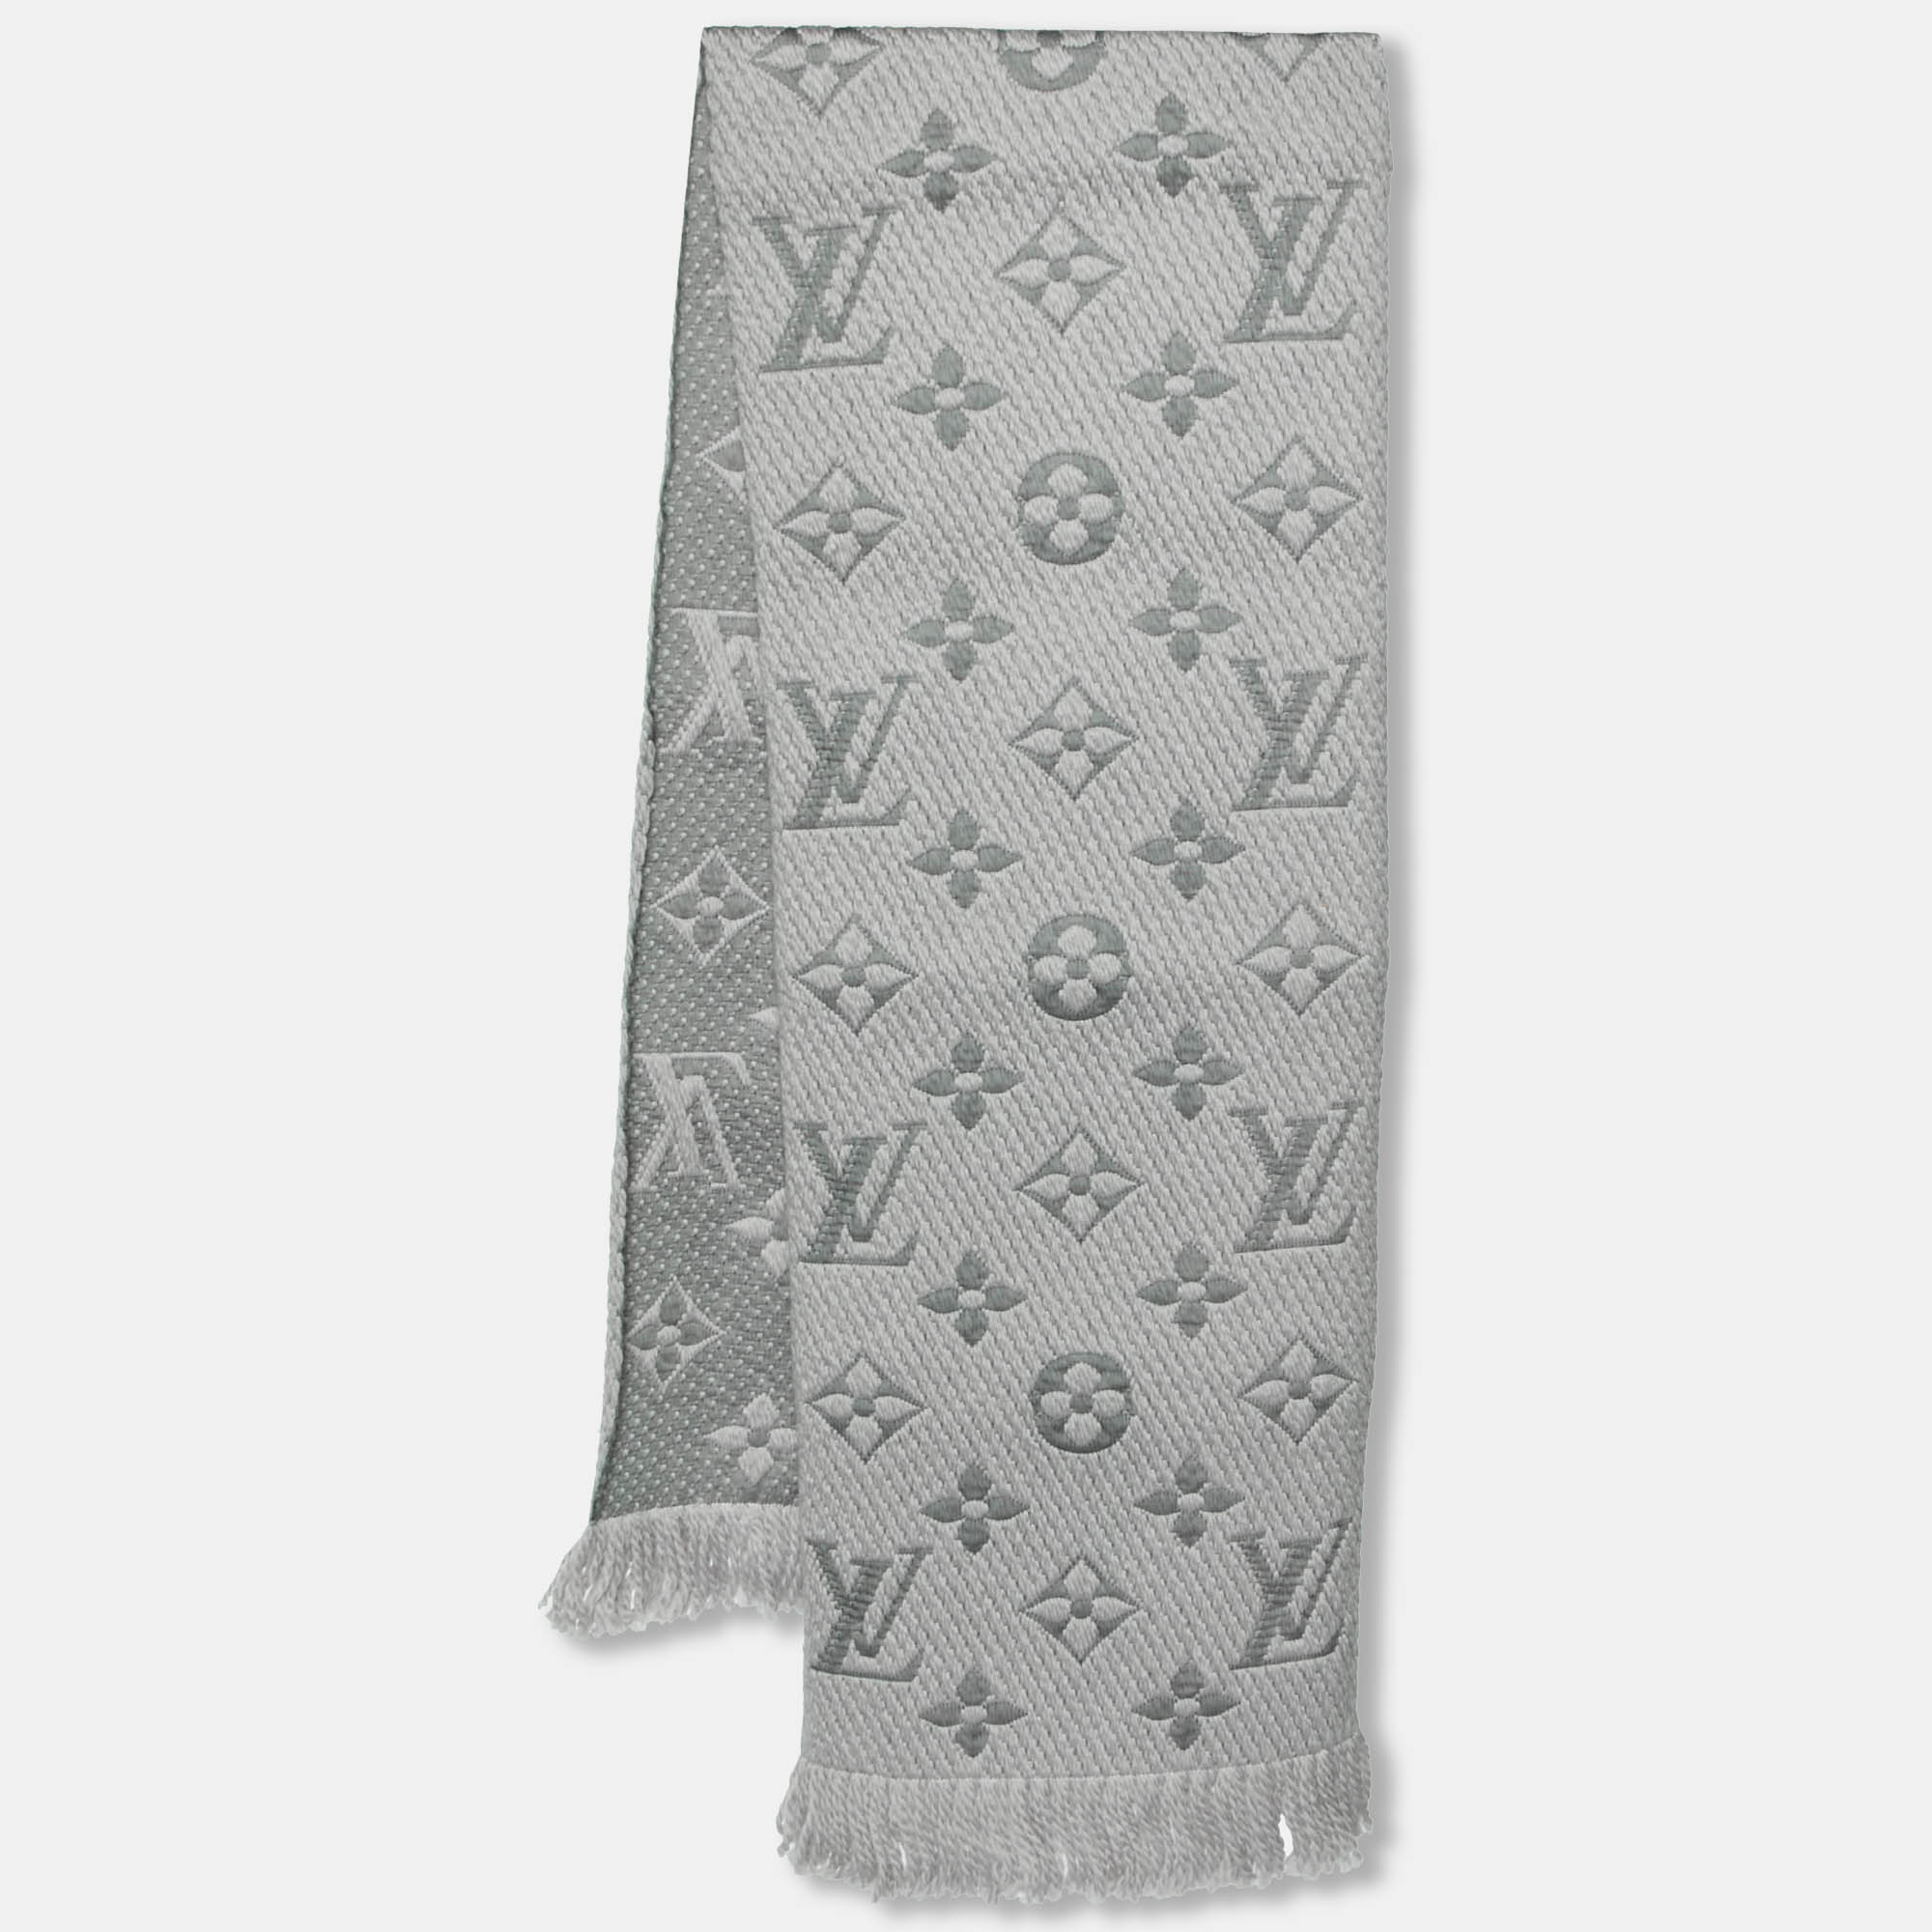 Louis Vuitton Logomania Gray Women Scarf Wool Blend Fringes Thermal Shawl  Wrap